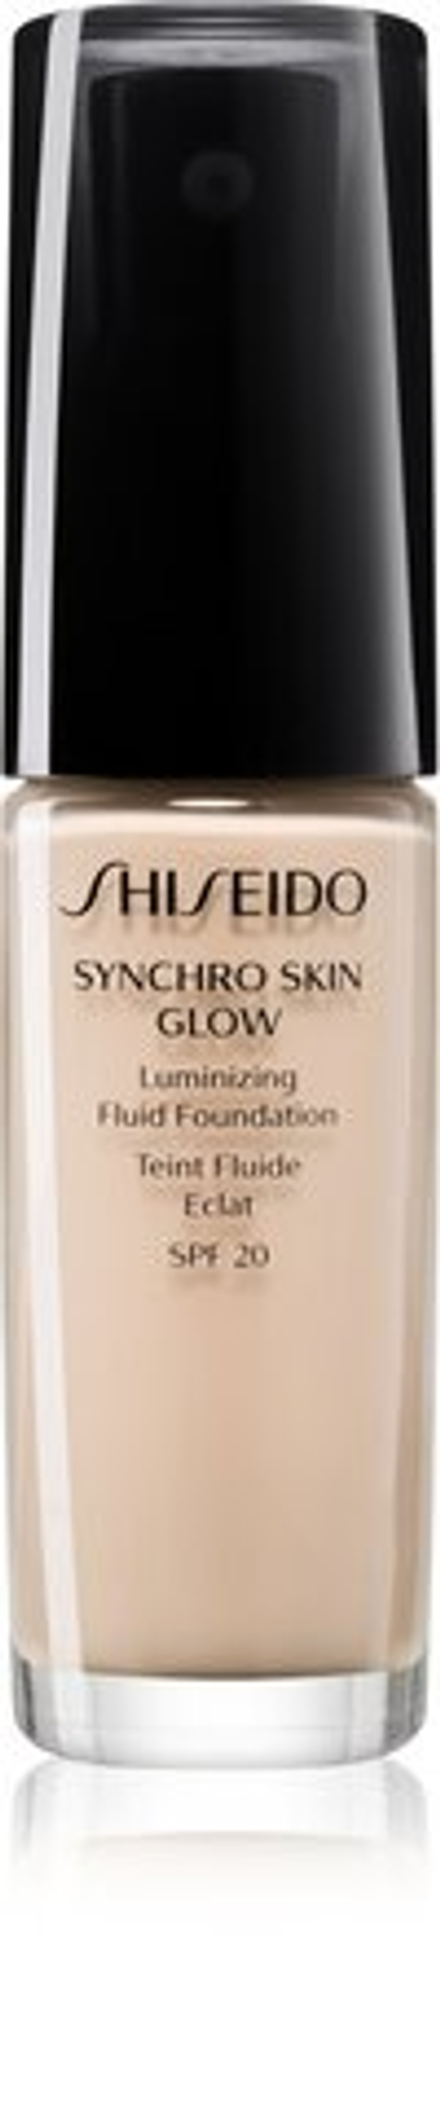 Shiseido Synchro Skin Glow Luminizing Fluid Foundation осветляющий тональный крем SPF 20